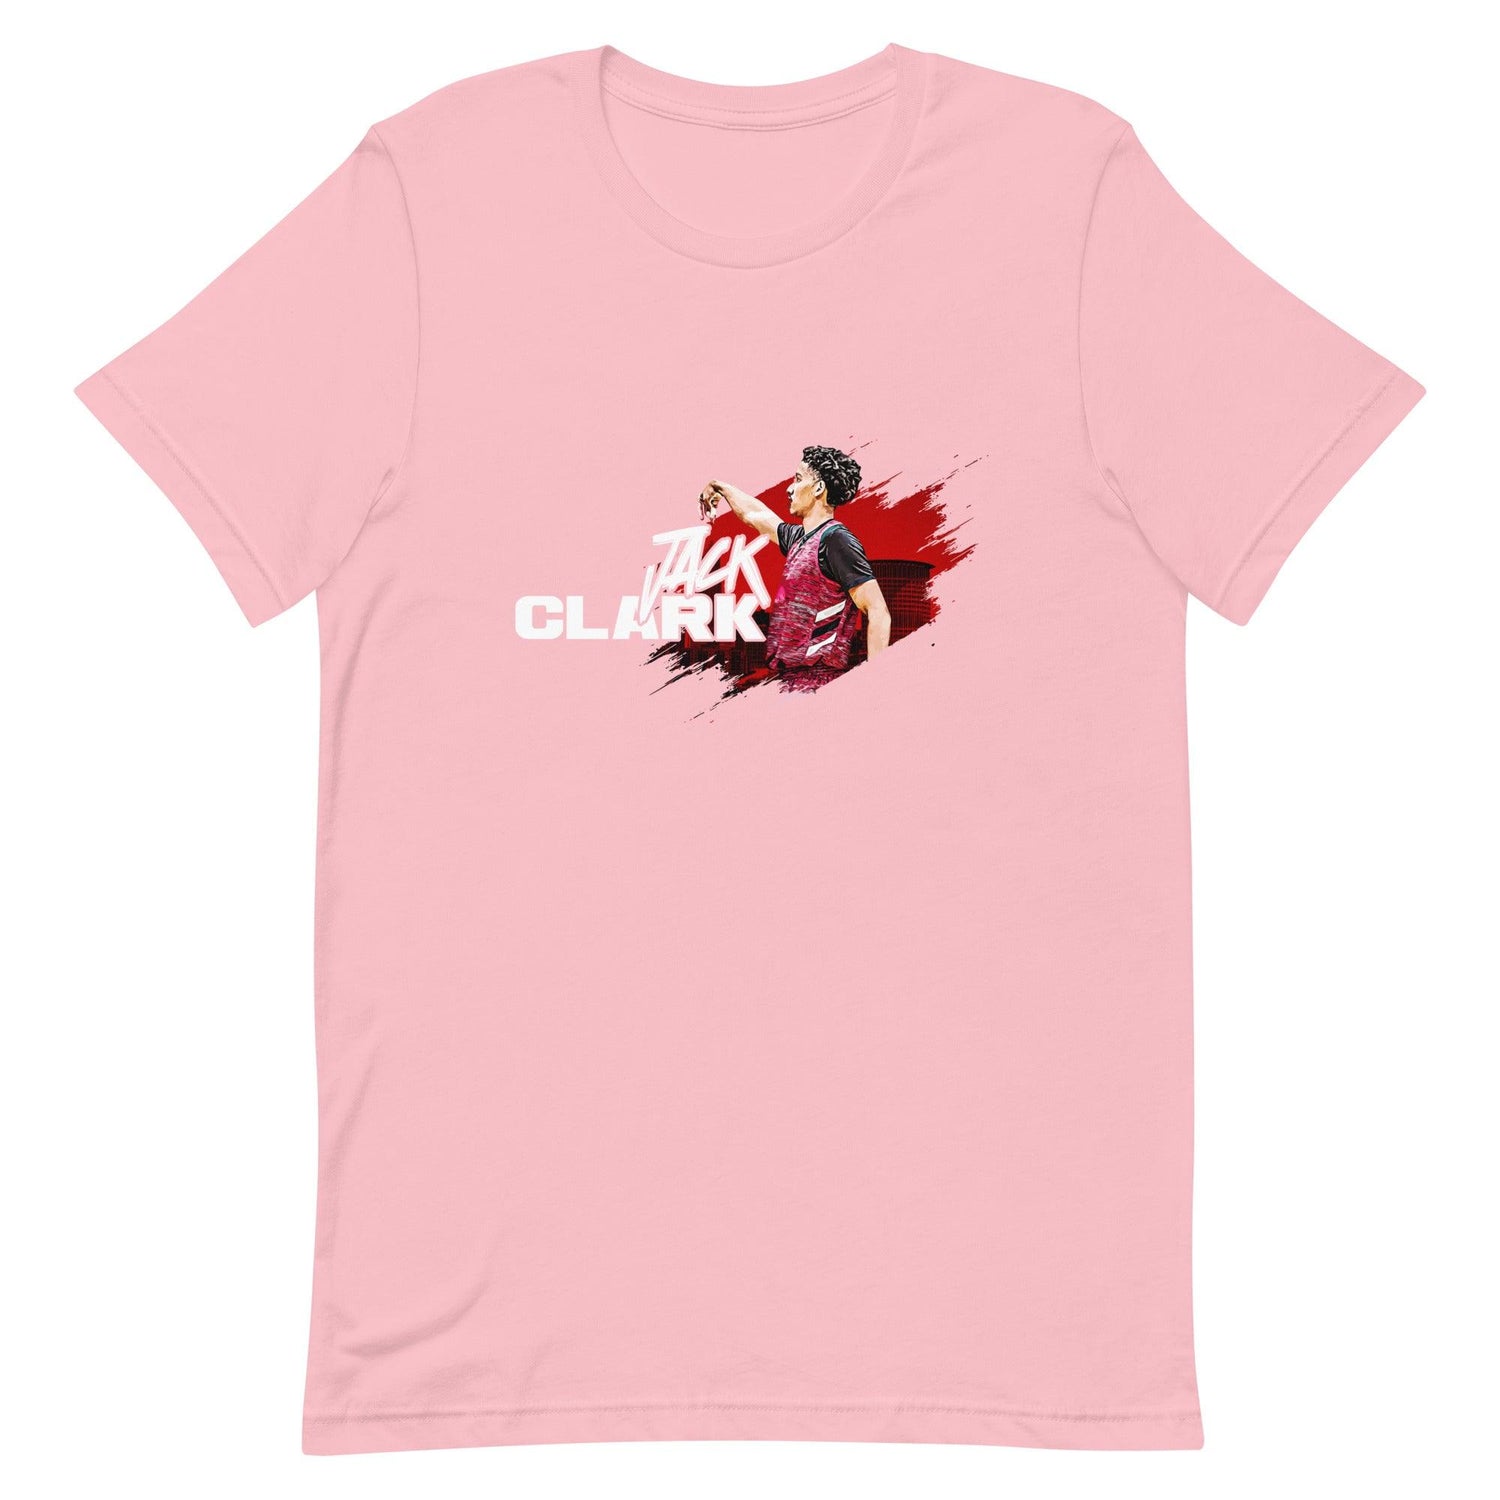 Jack Clark "Gameday" t-shirt - Fan Arch